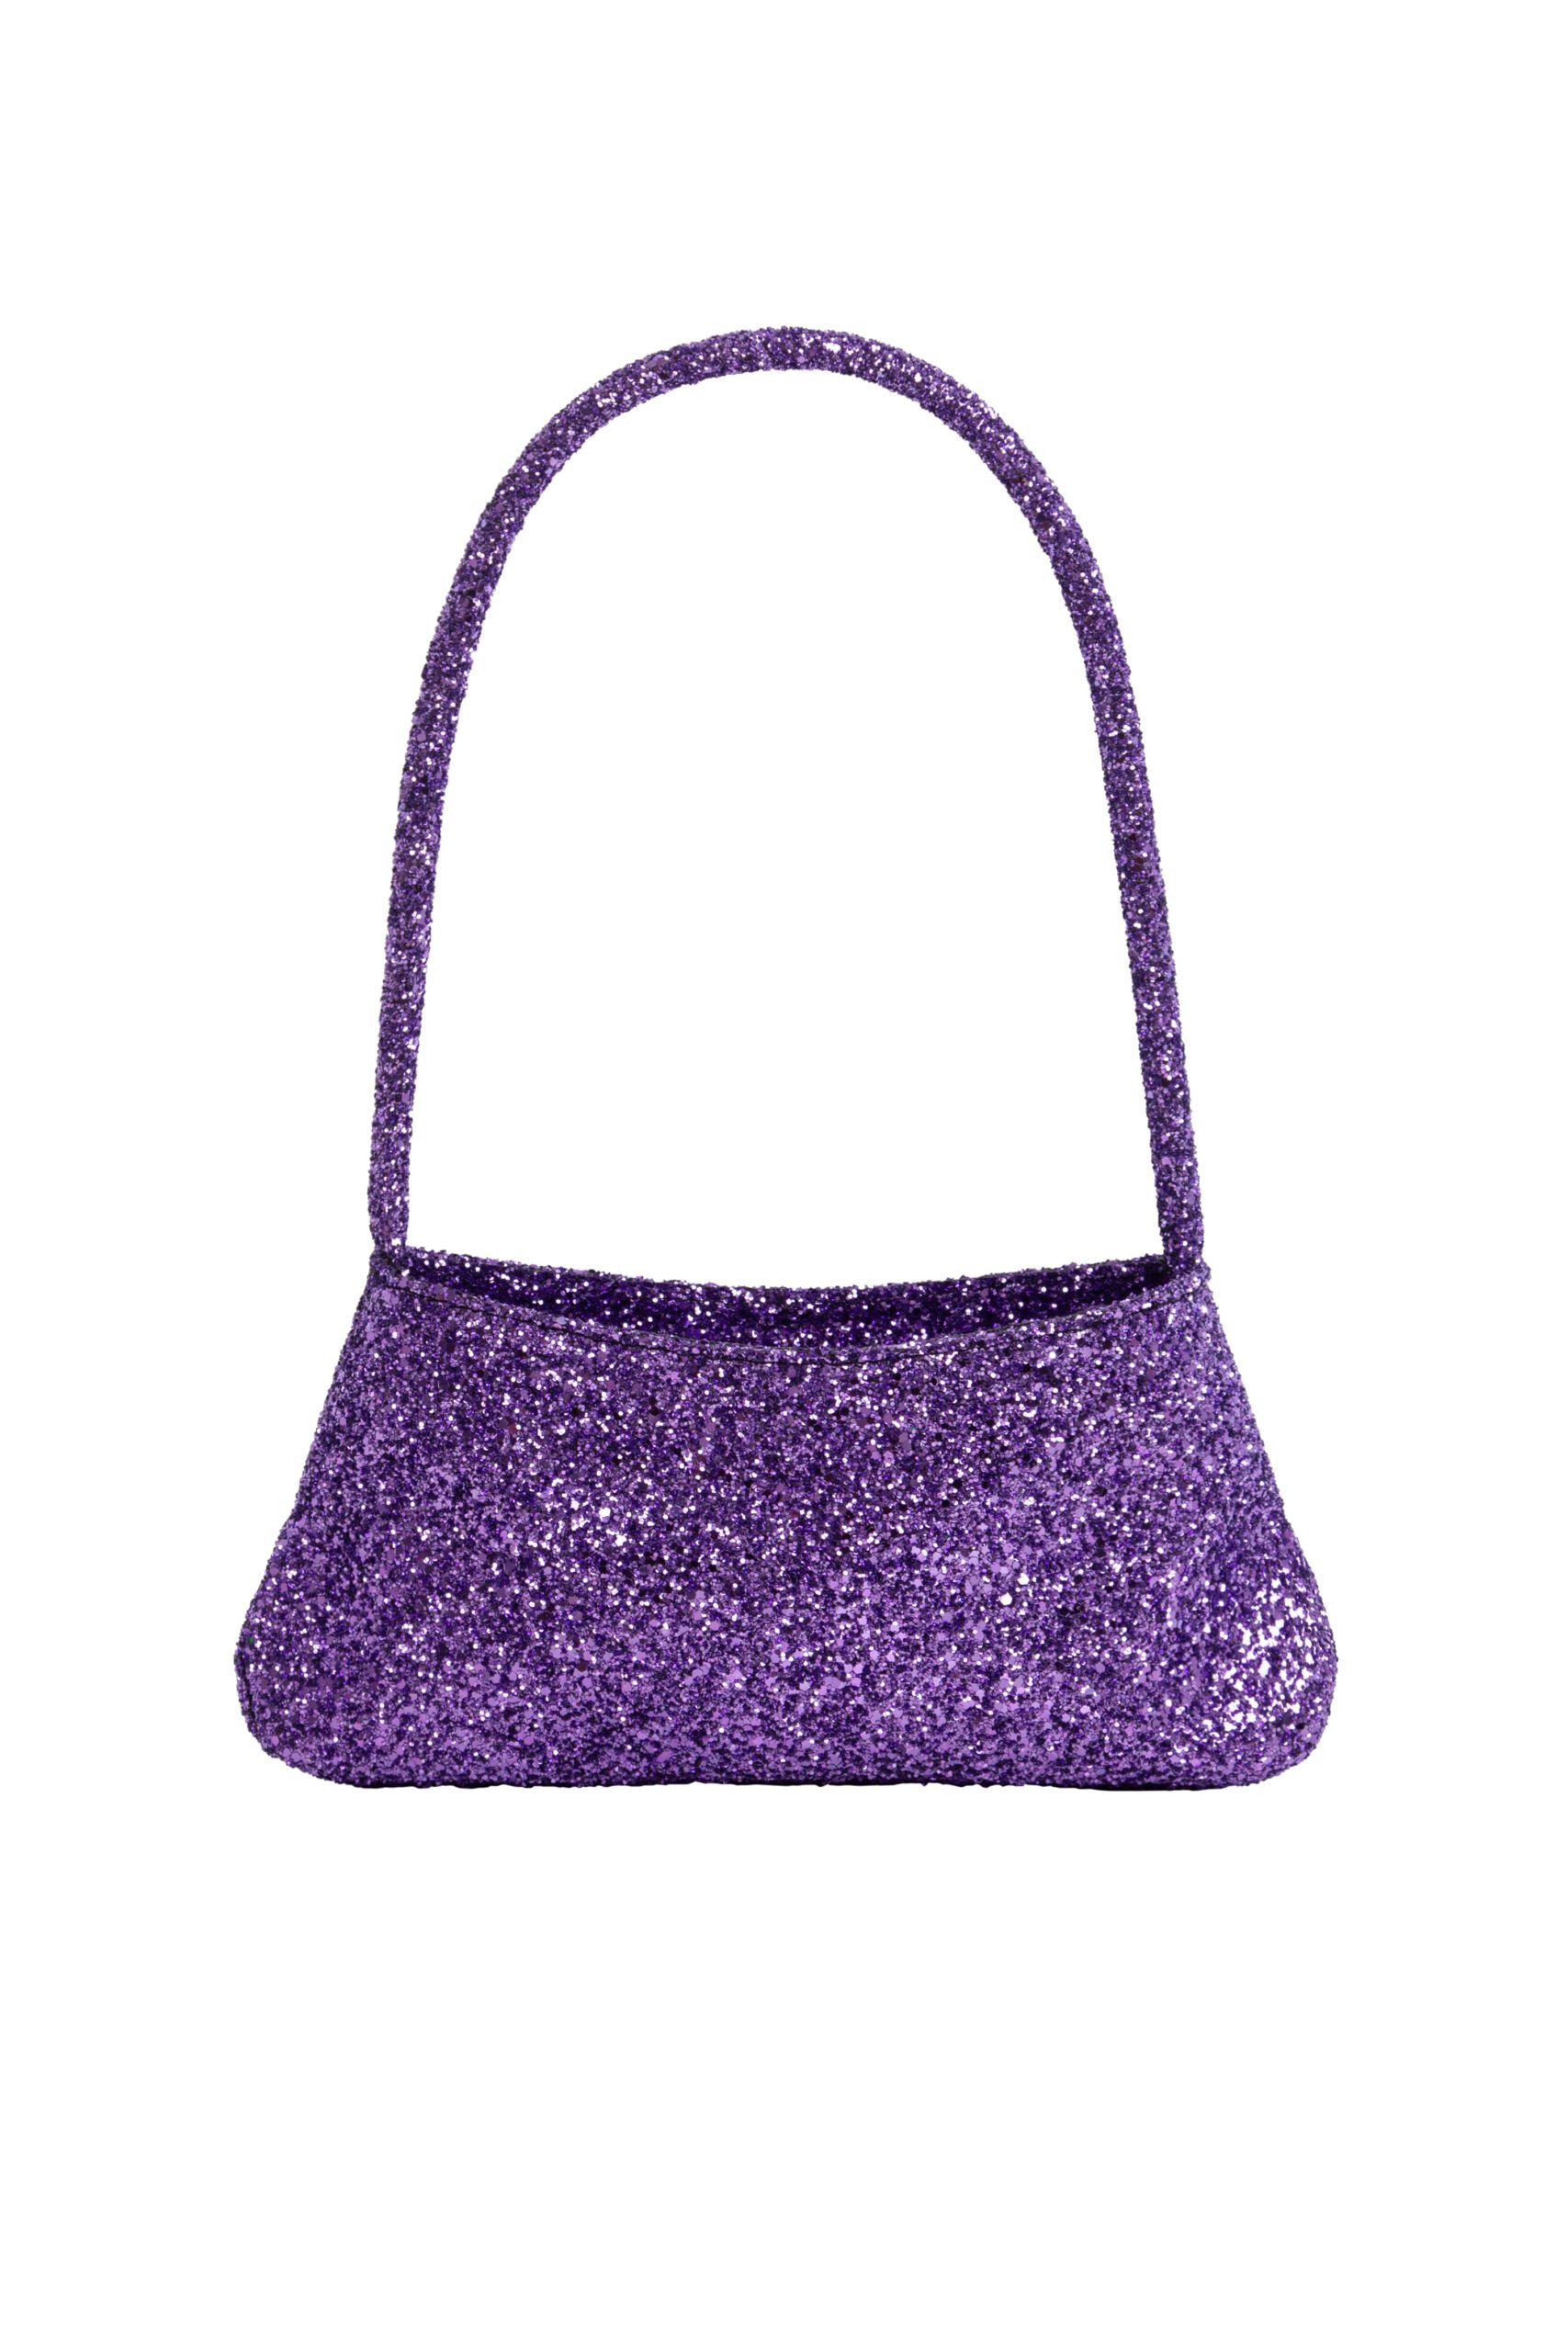 la-chaine-sky-purple-bag-product-true-grace.jpg